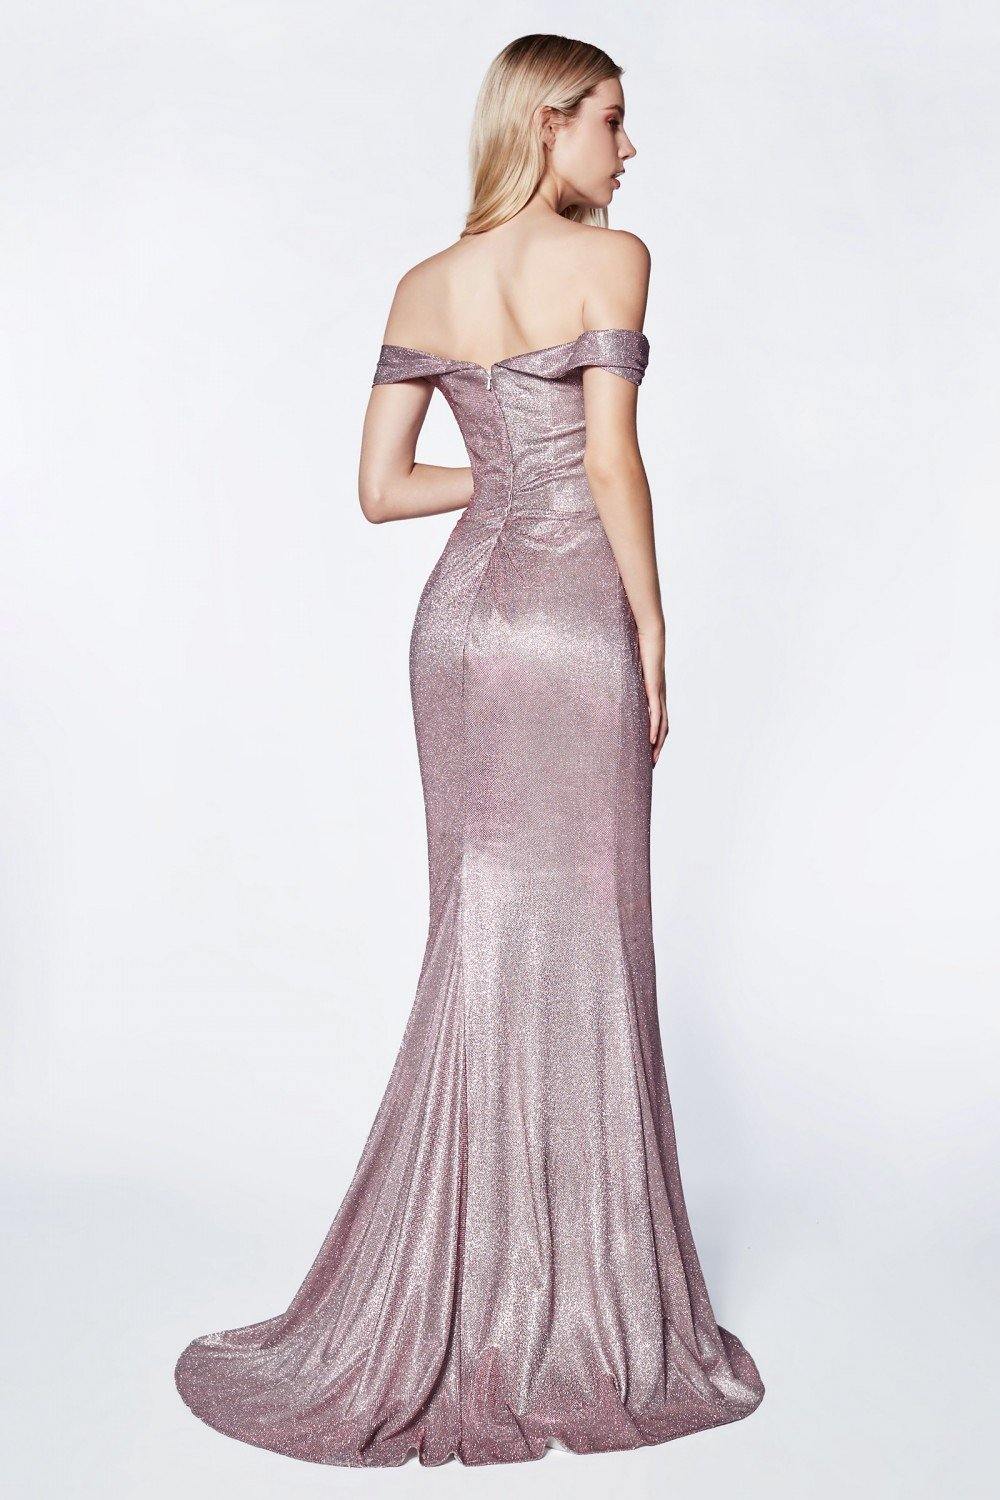 Prom Long Metallic Dress - The Dress Outlet